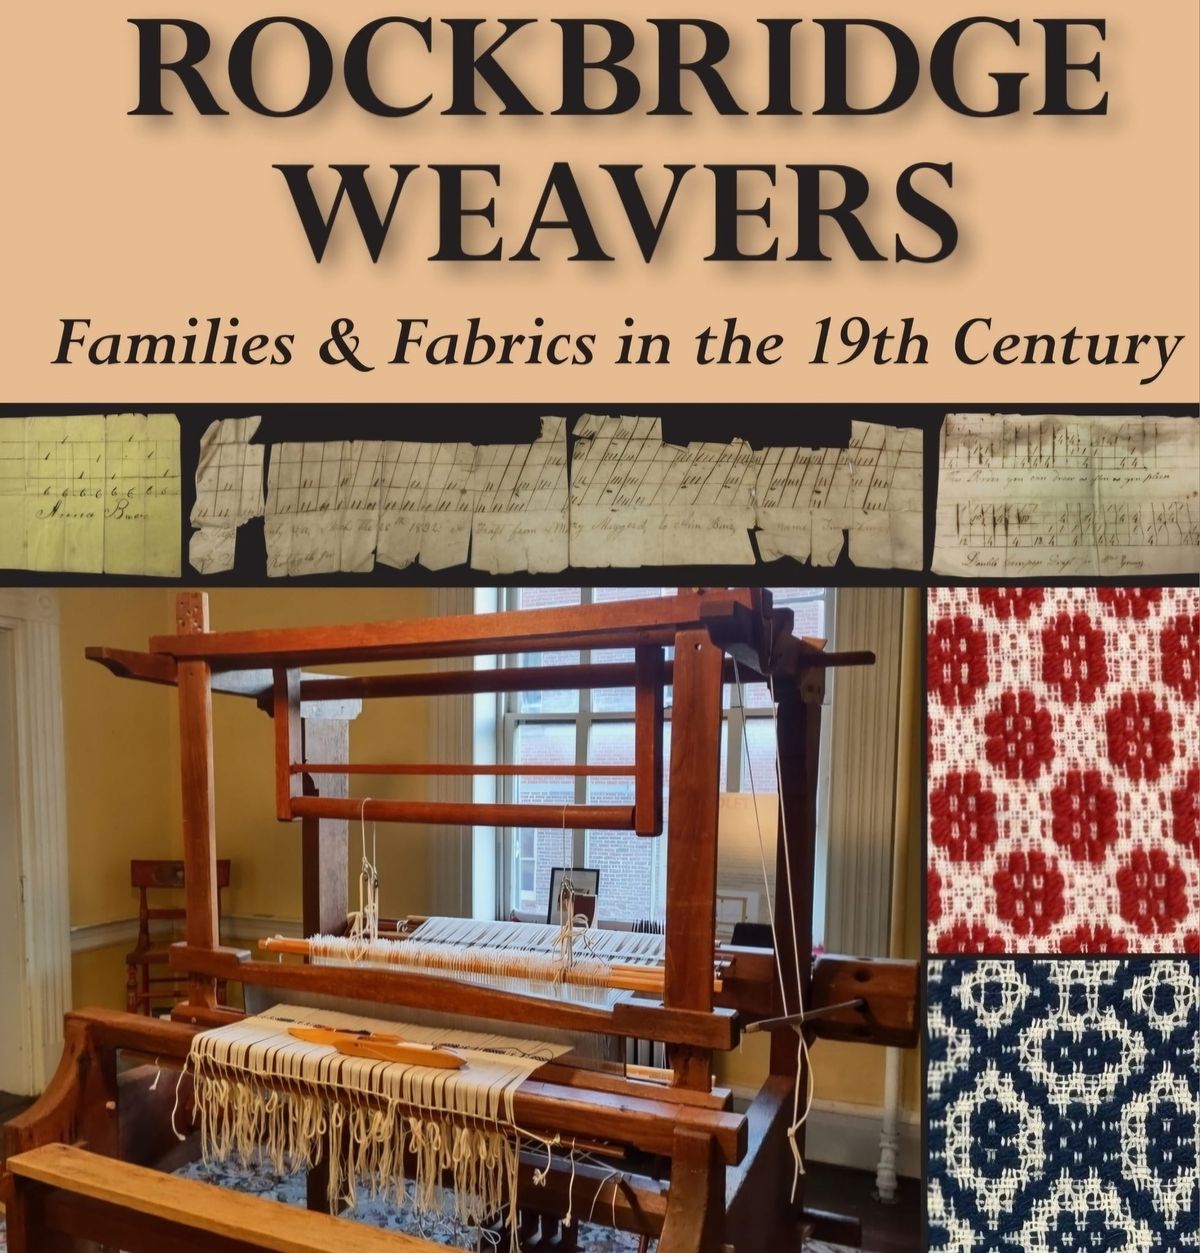 Rockbridge Weavers: Families & Fabrics in the 19th Century